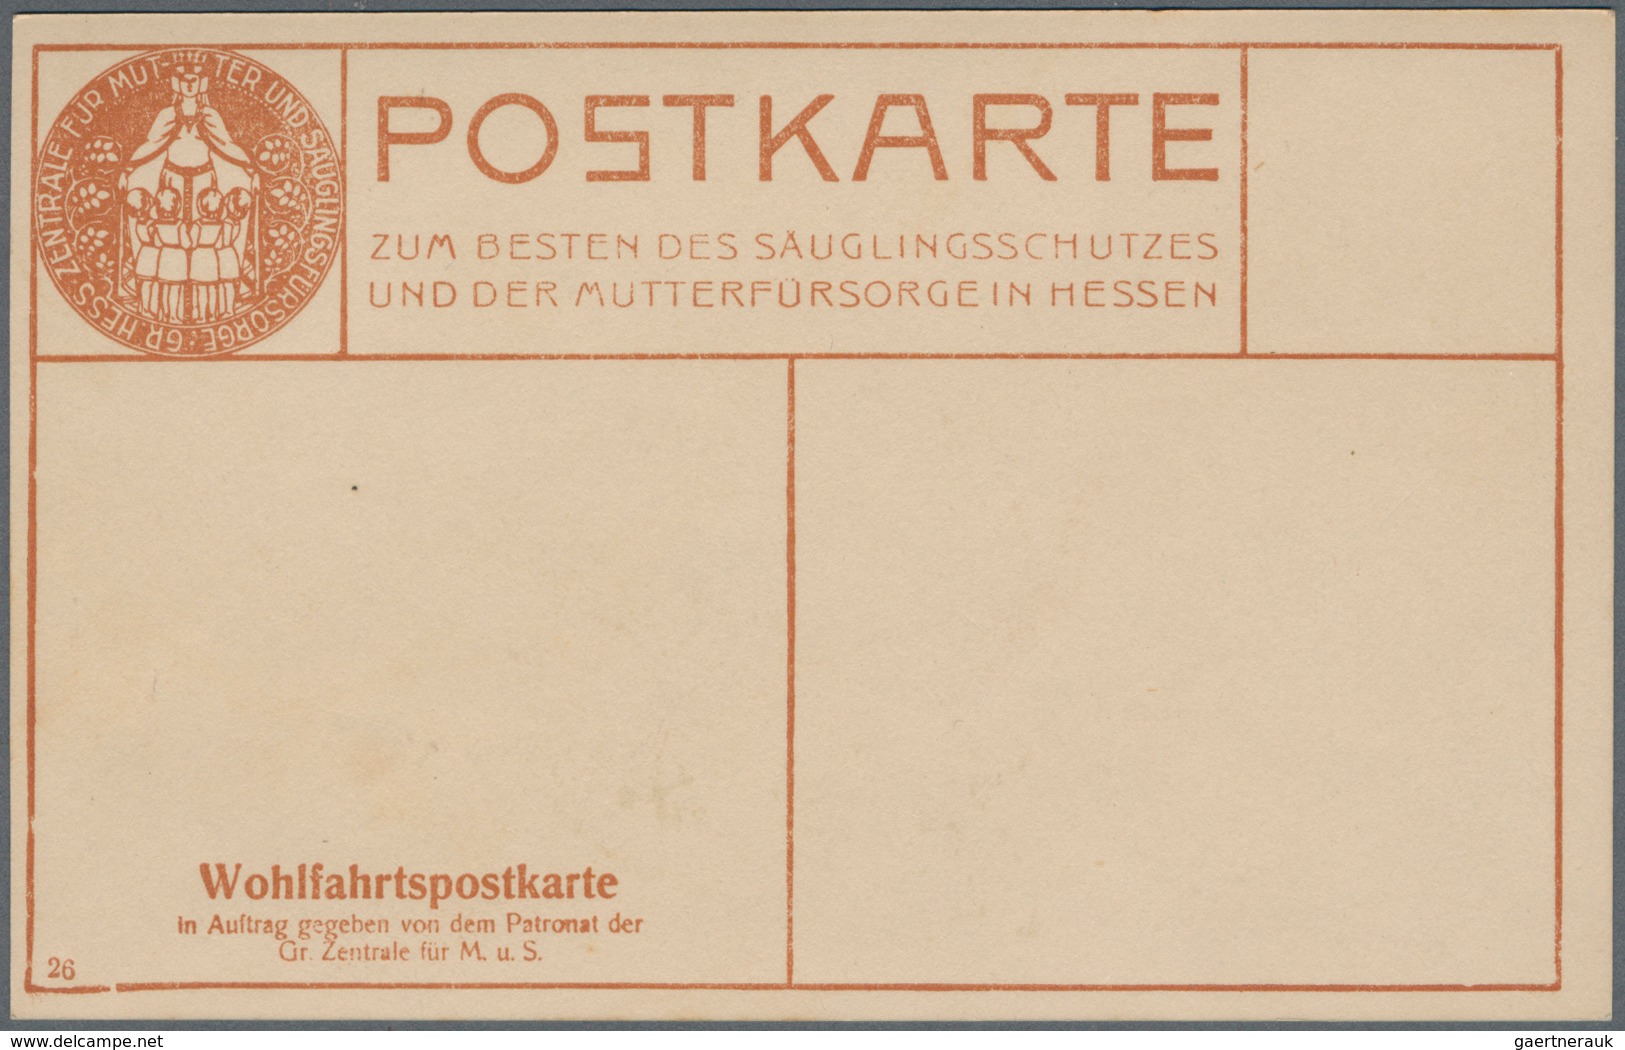 Ansichtskarten: Hessen: ADEL / FLUG, vier historische Ansichtskarten, davon zwei Karten Adel Ernst L